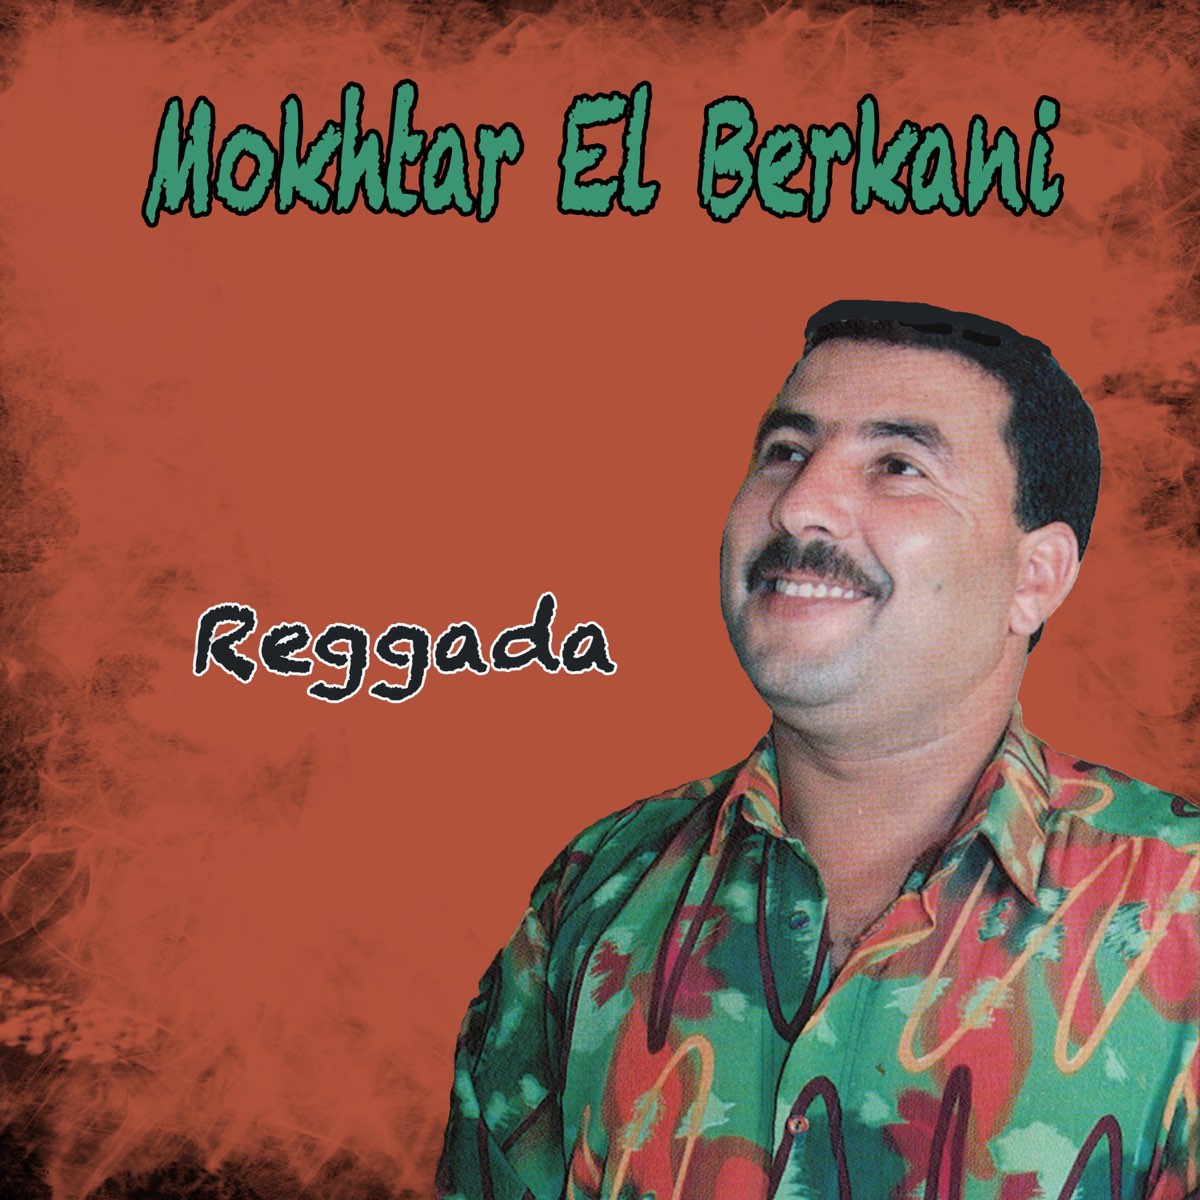 Reggada - Album by Mokhtar El Berkani - Apple Music